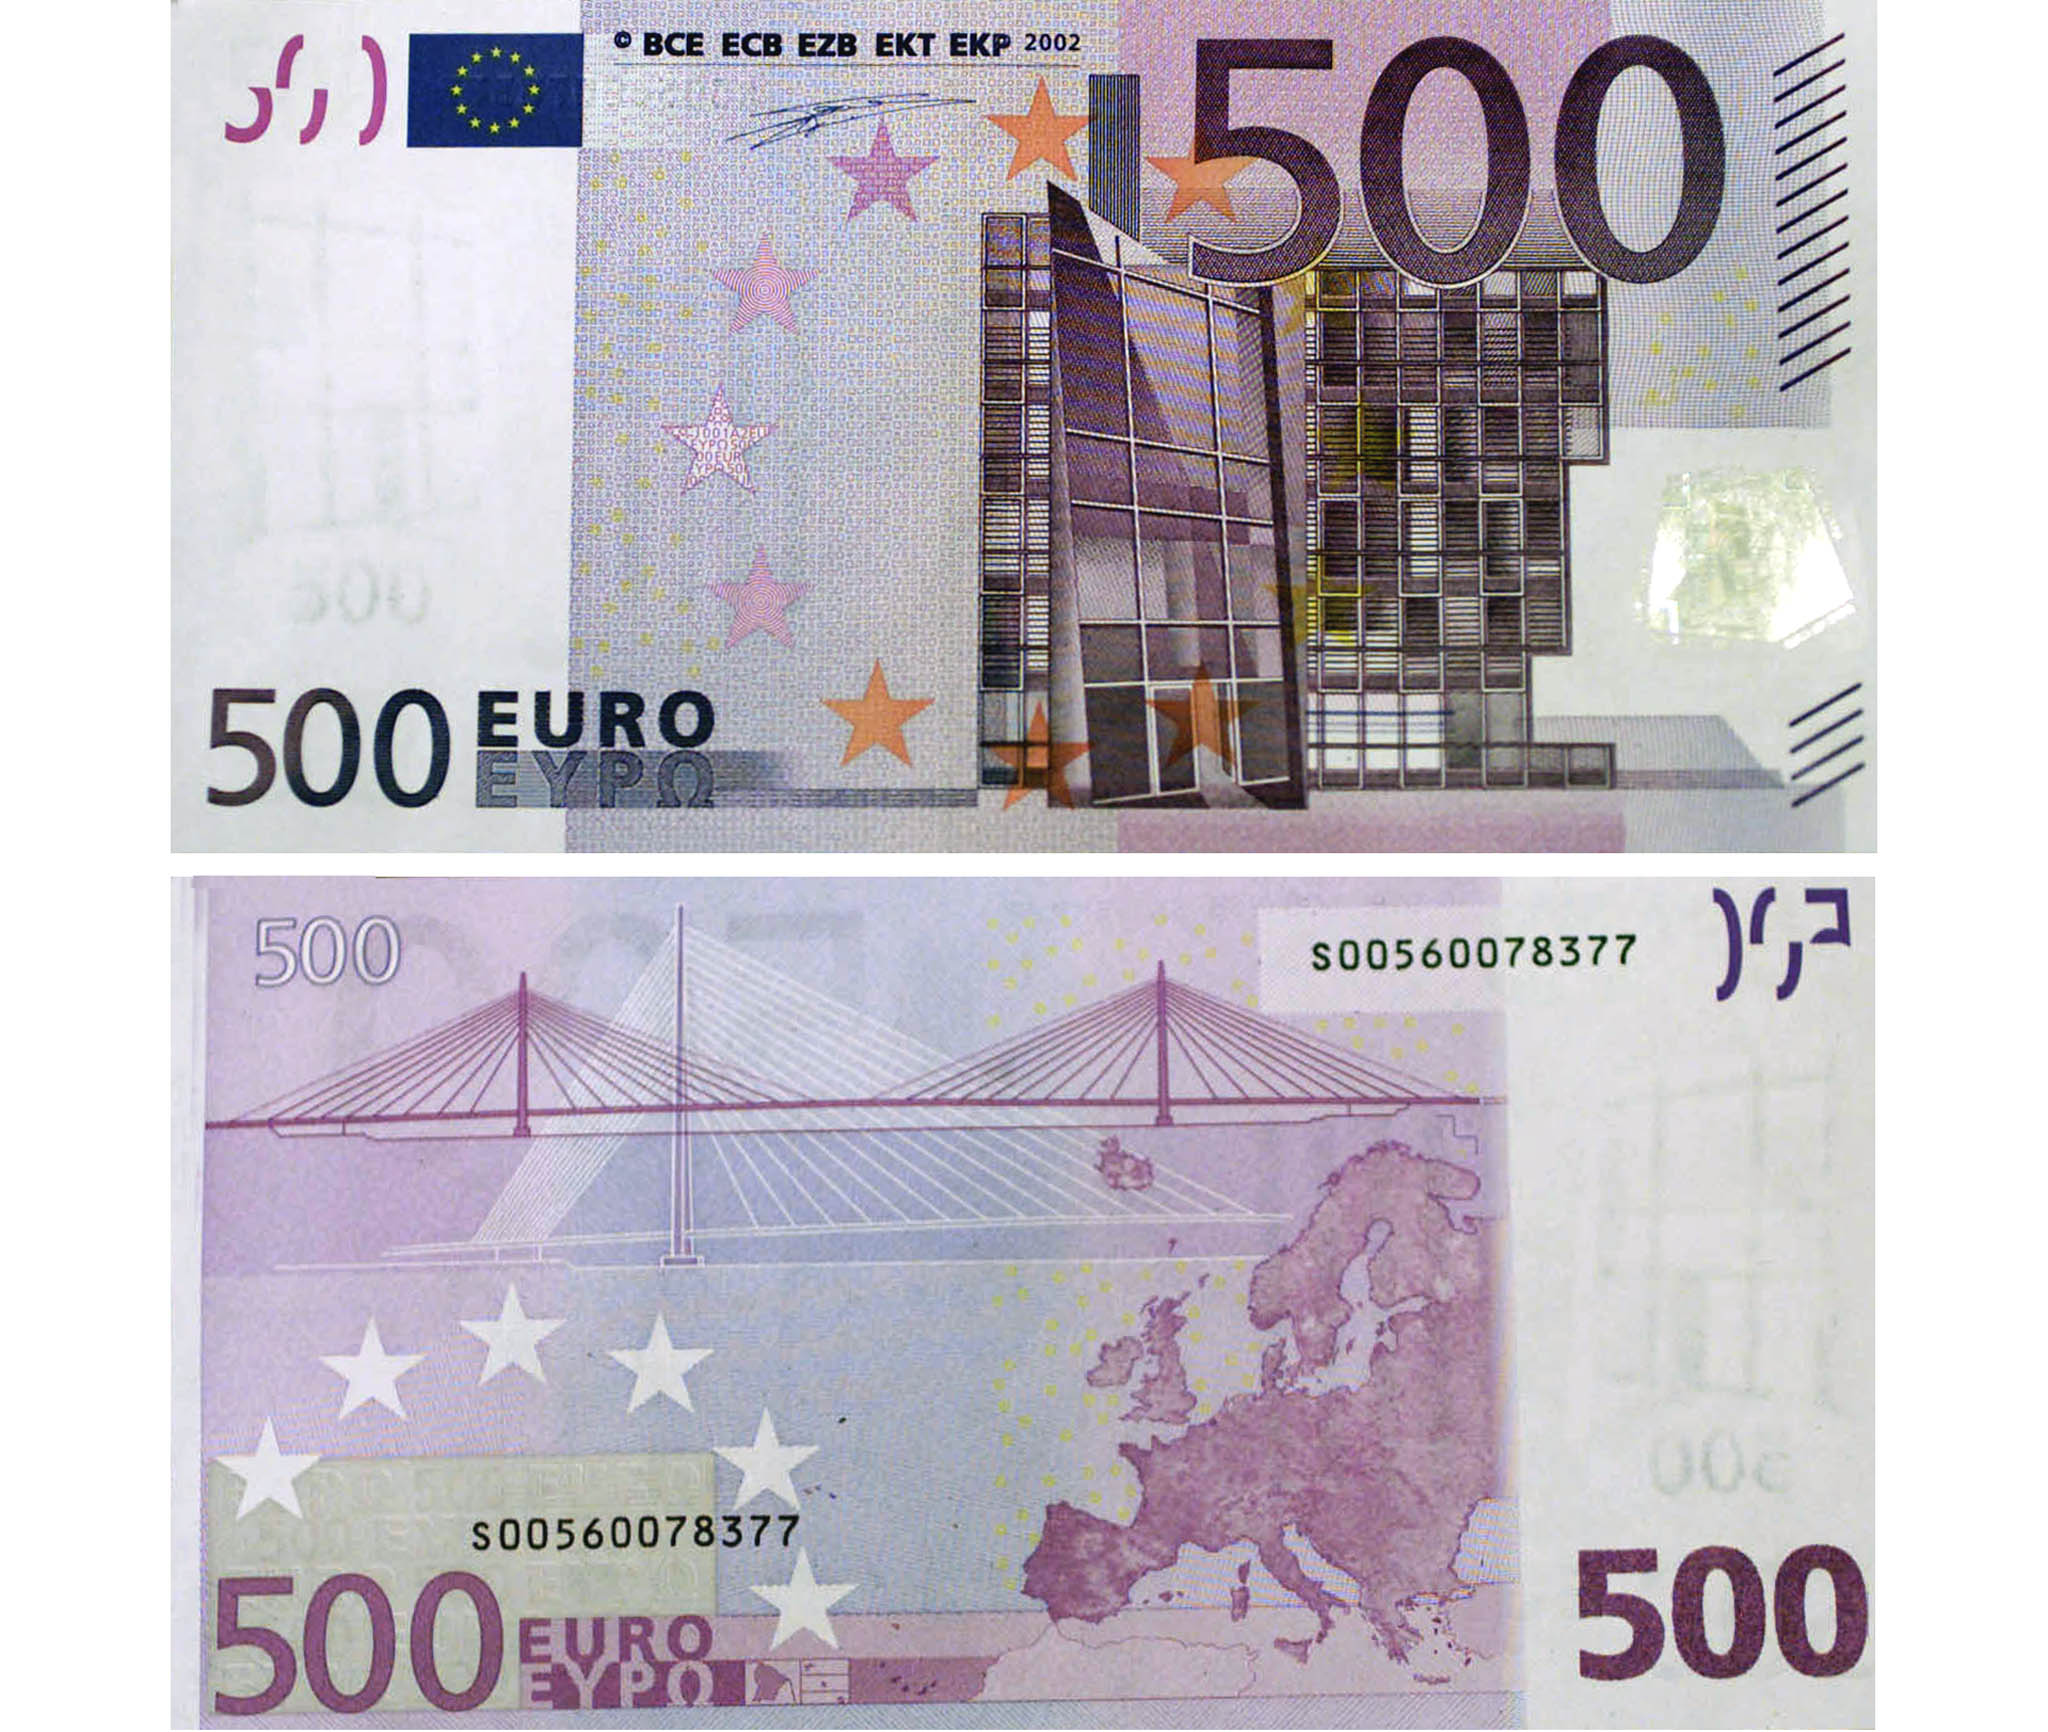 Тысяча евро в долларах. 500 Эеаро. 500 Евро. Купюры евро. Банкноты евро 500.